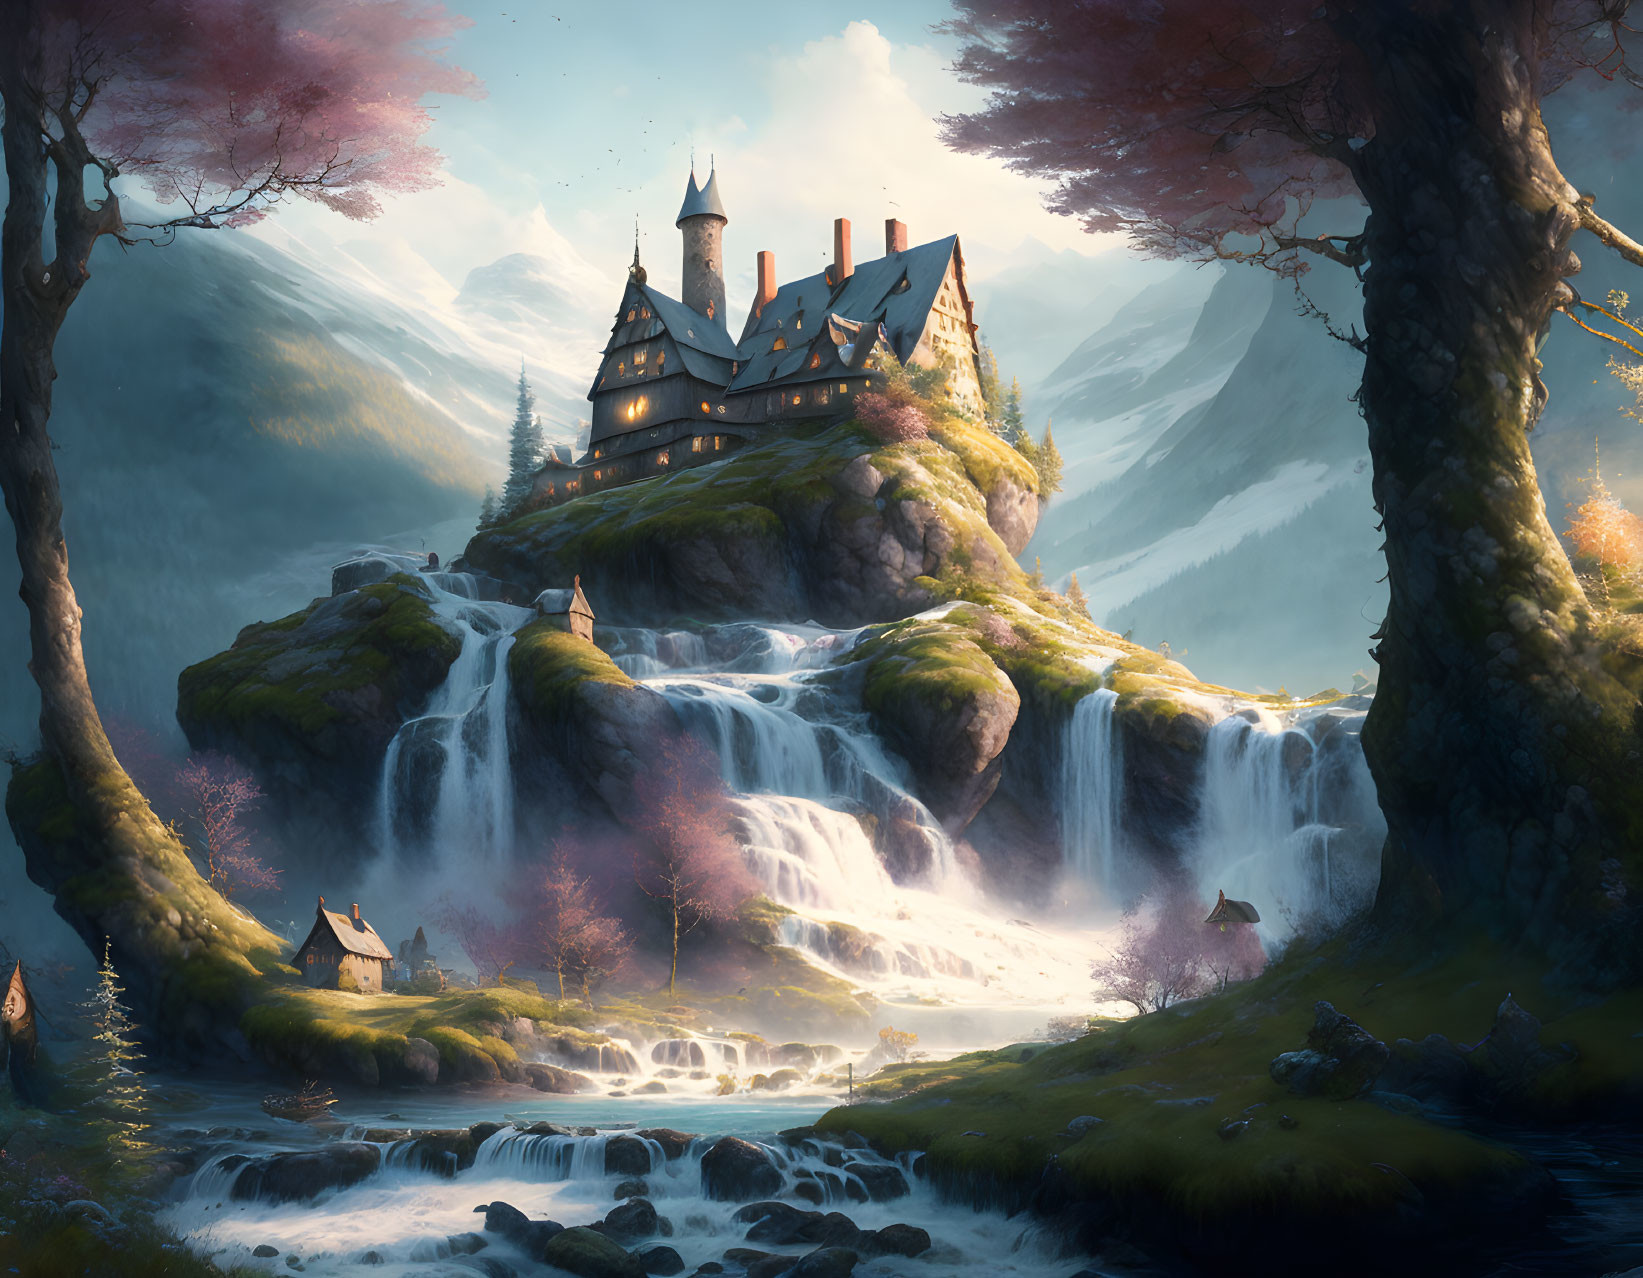 Grand castle on lush waterfall in fantasy landscape